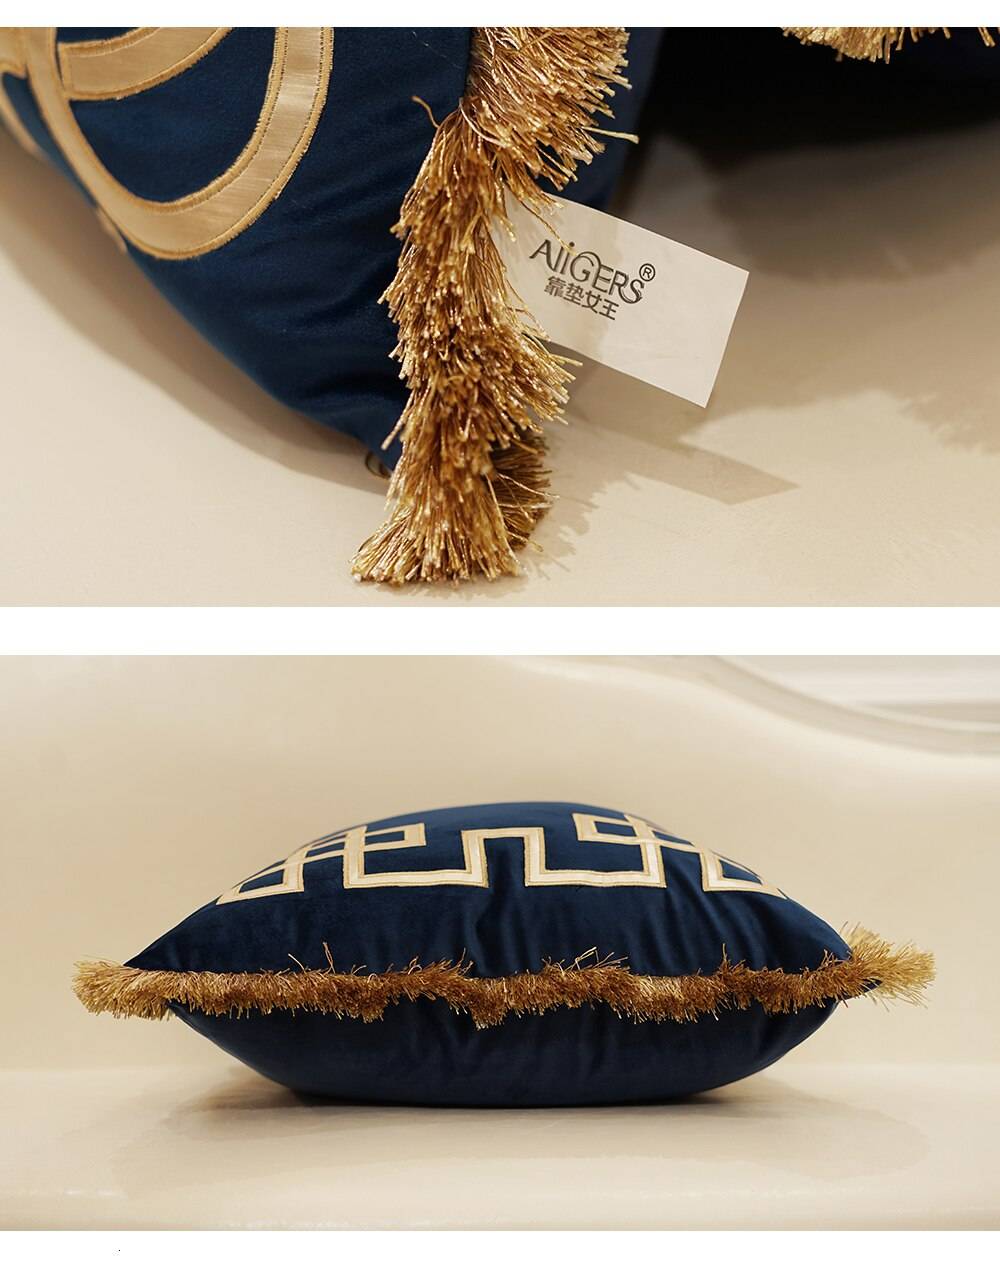 Luxury Embroidered Cushion Covers Velvet Tassels Pillow Case Home Decorative European Sofa Car Throw Pillows Blue Brown